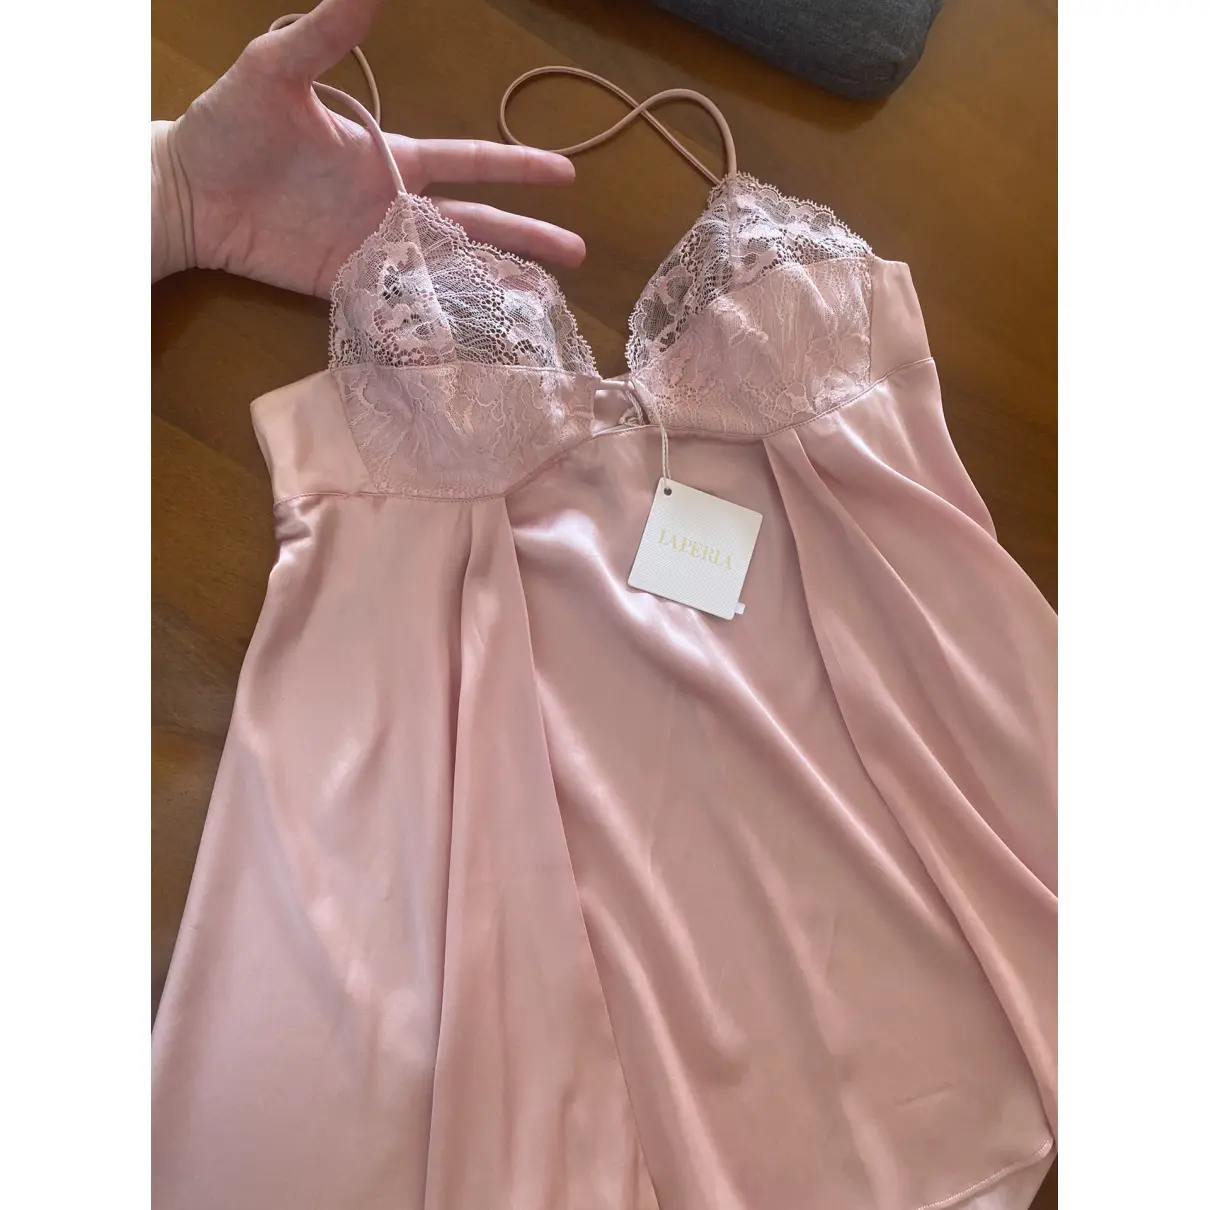 Lace mini dress La Perla